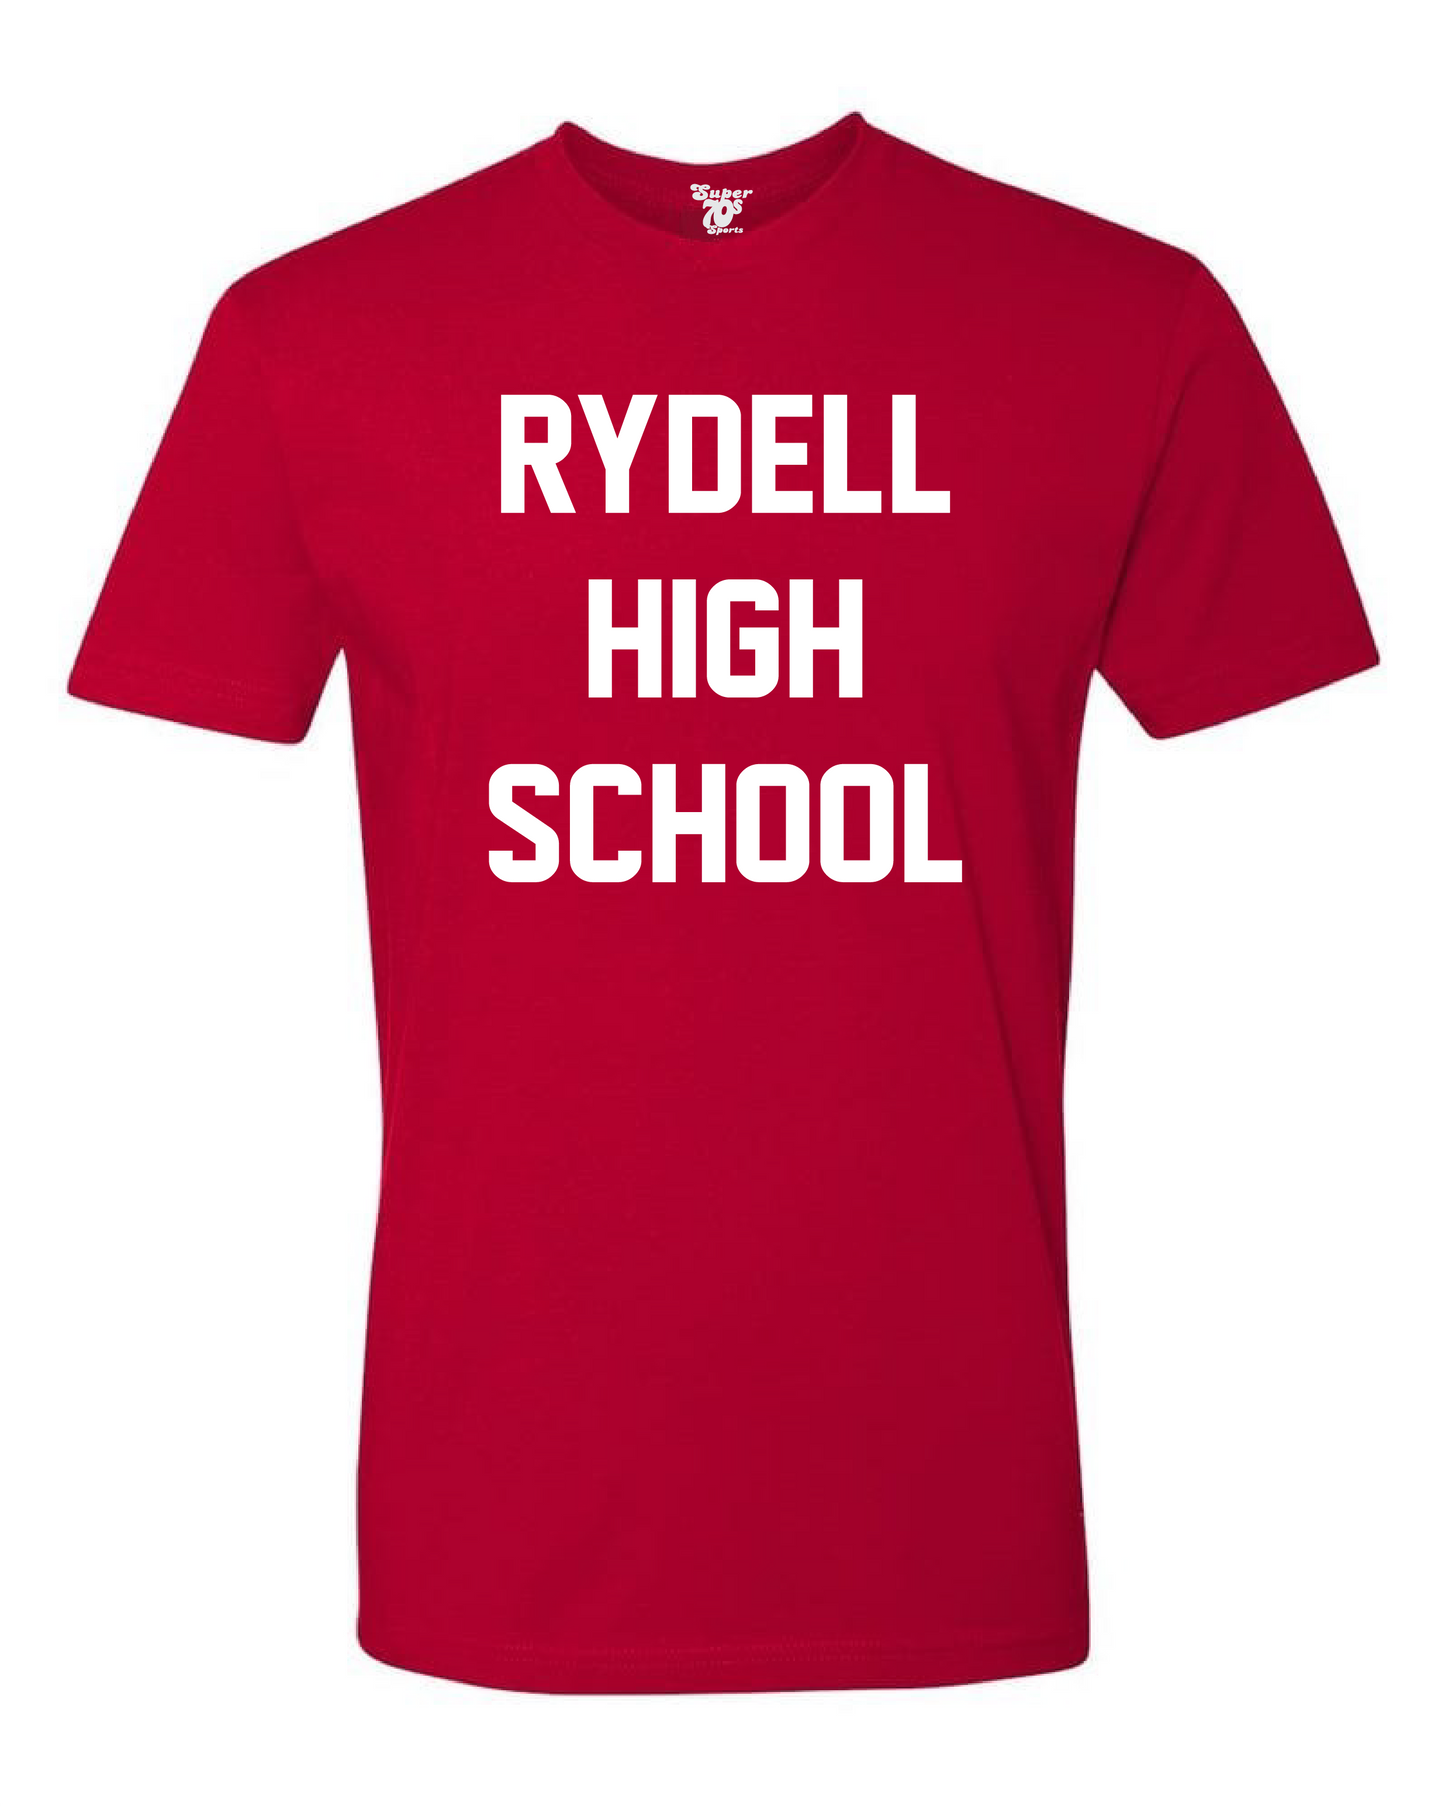 Rydell High School Tee